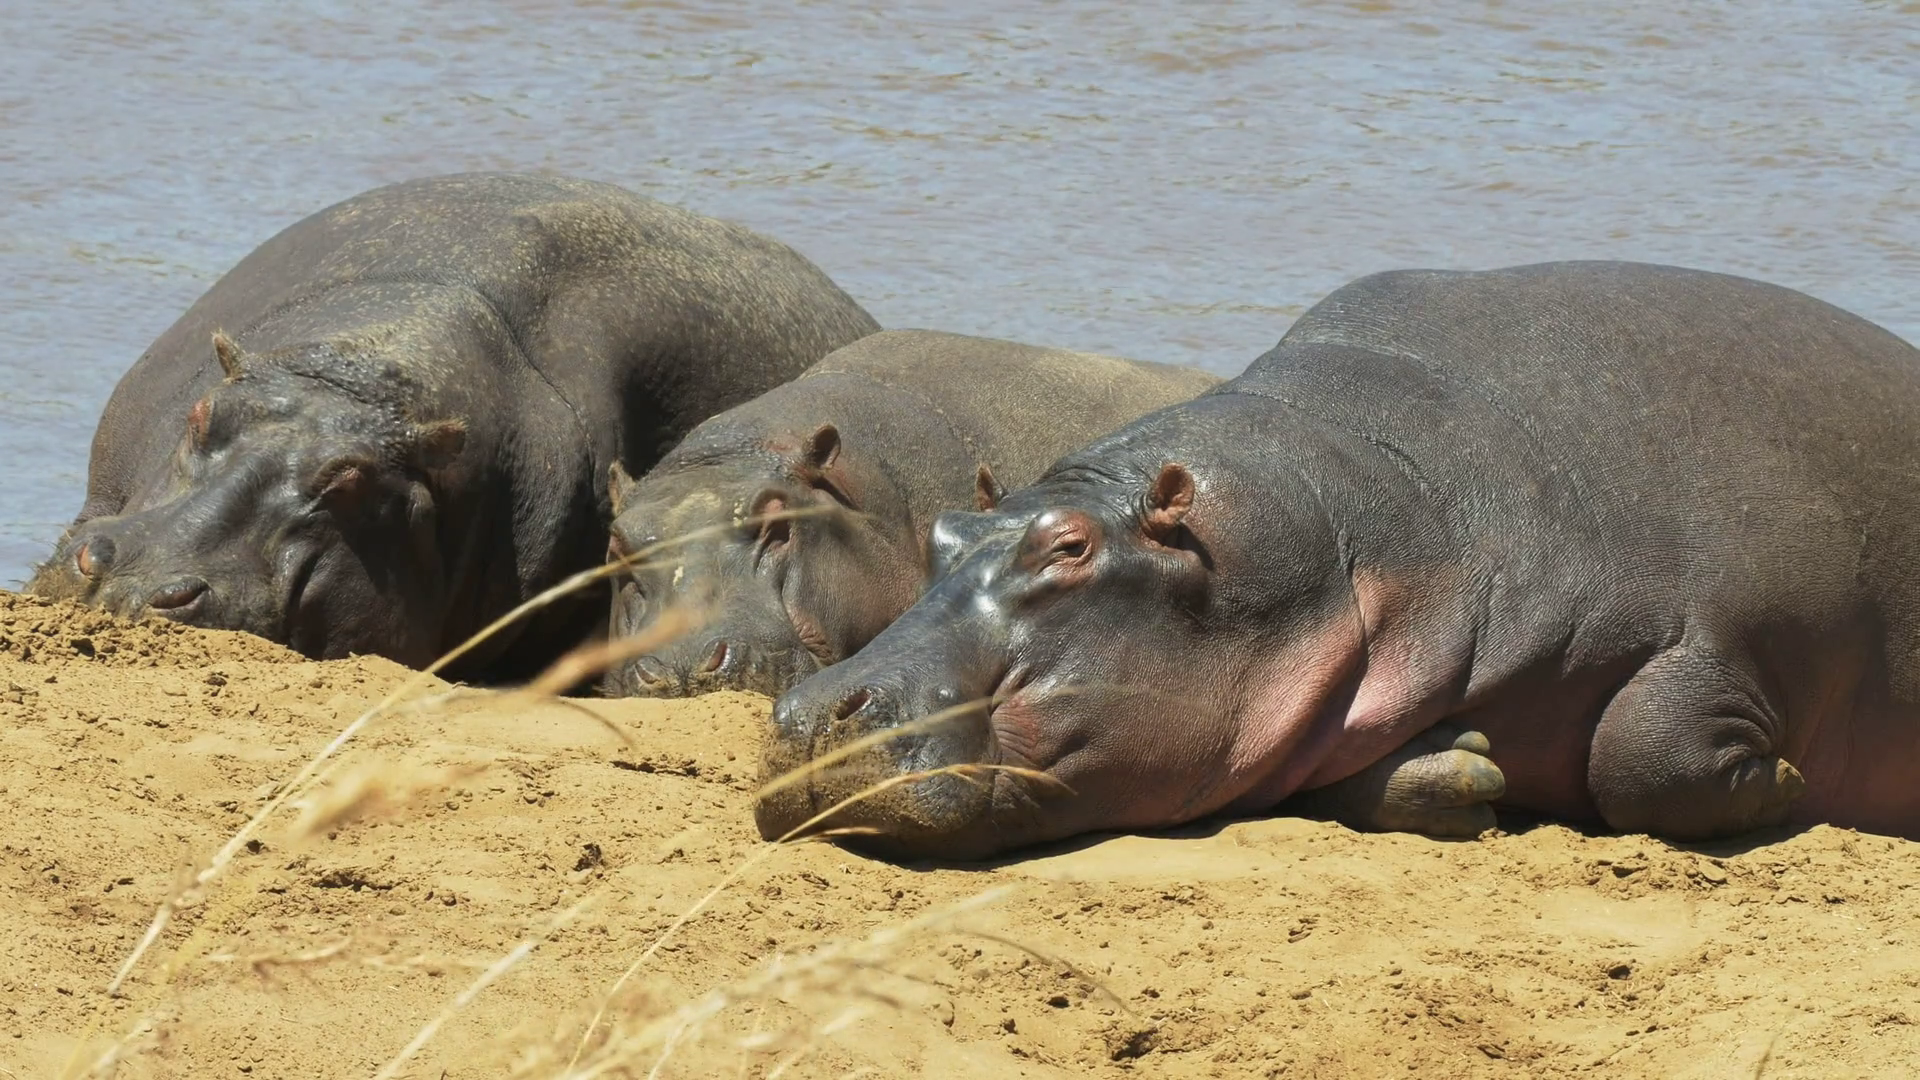 e-up-of-three-hippos-sunbathing-on-the-river-bank-at-masai-mara-kenya_rrteg6ikx_thumbnail-full01.png